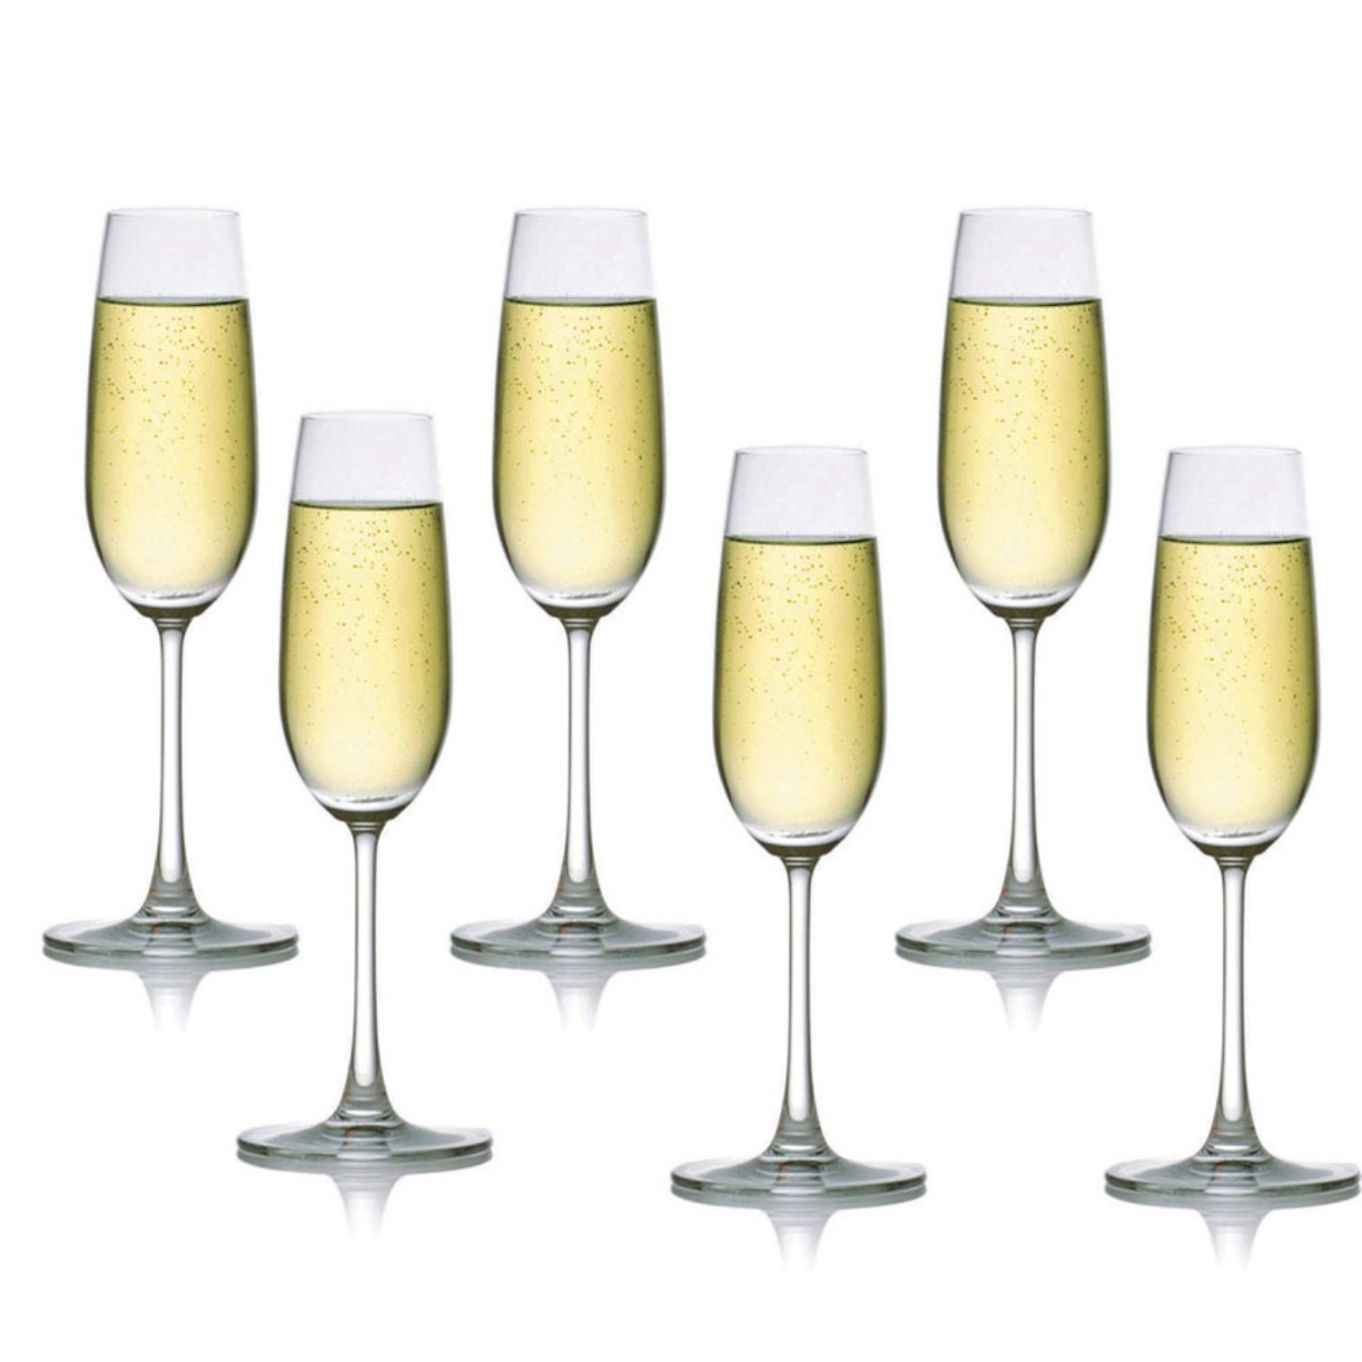 Ocean Madison Flute Champagne Glass 210 Ml Set Of 6